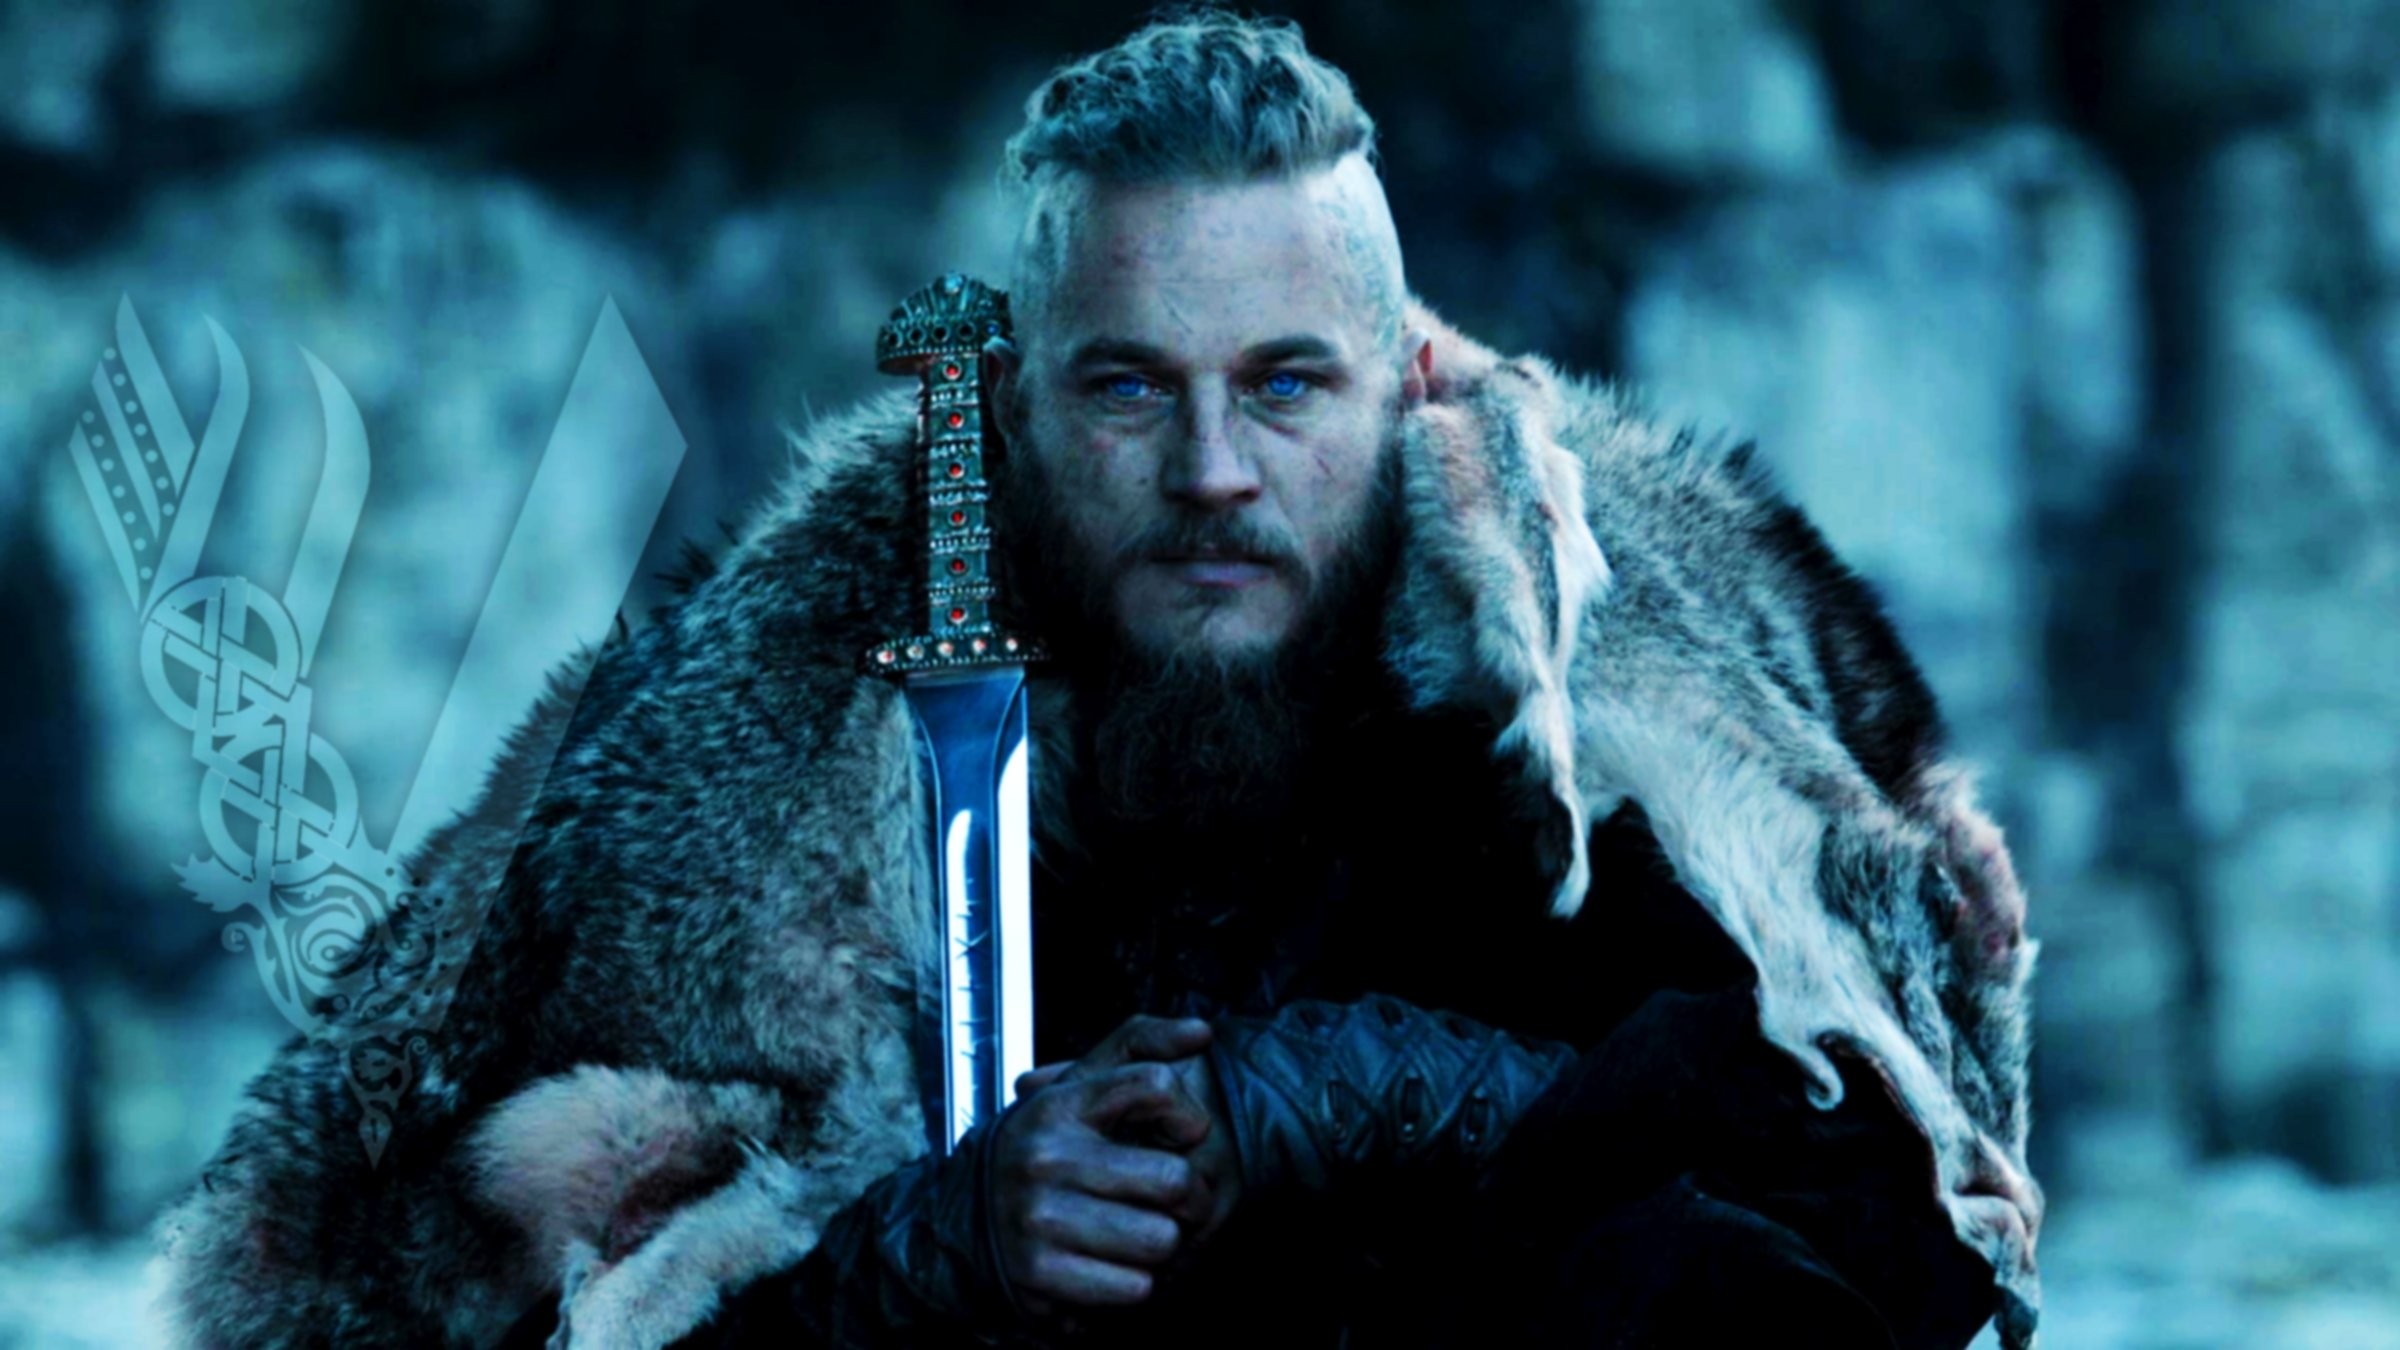 fond d'écran vikings,film,humain,barbe,personnage fictif,film d'action